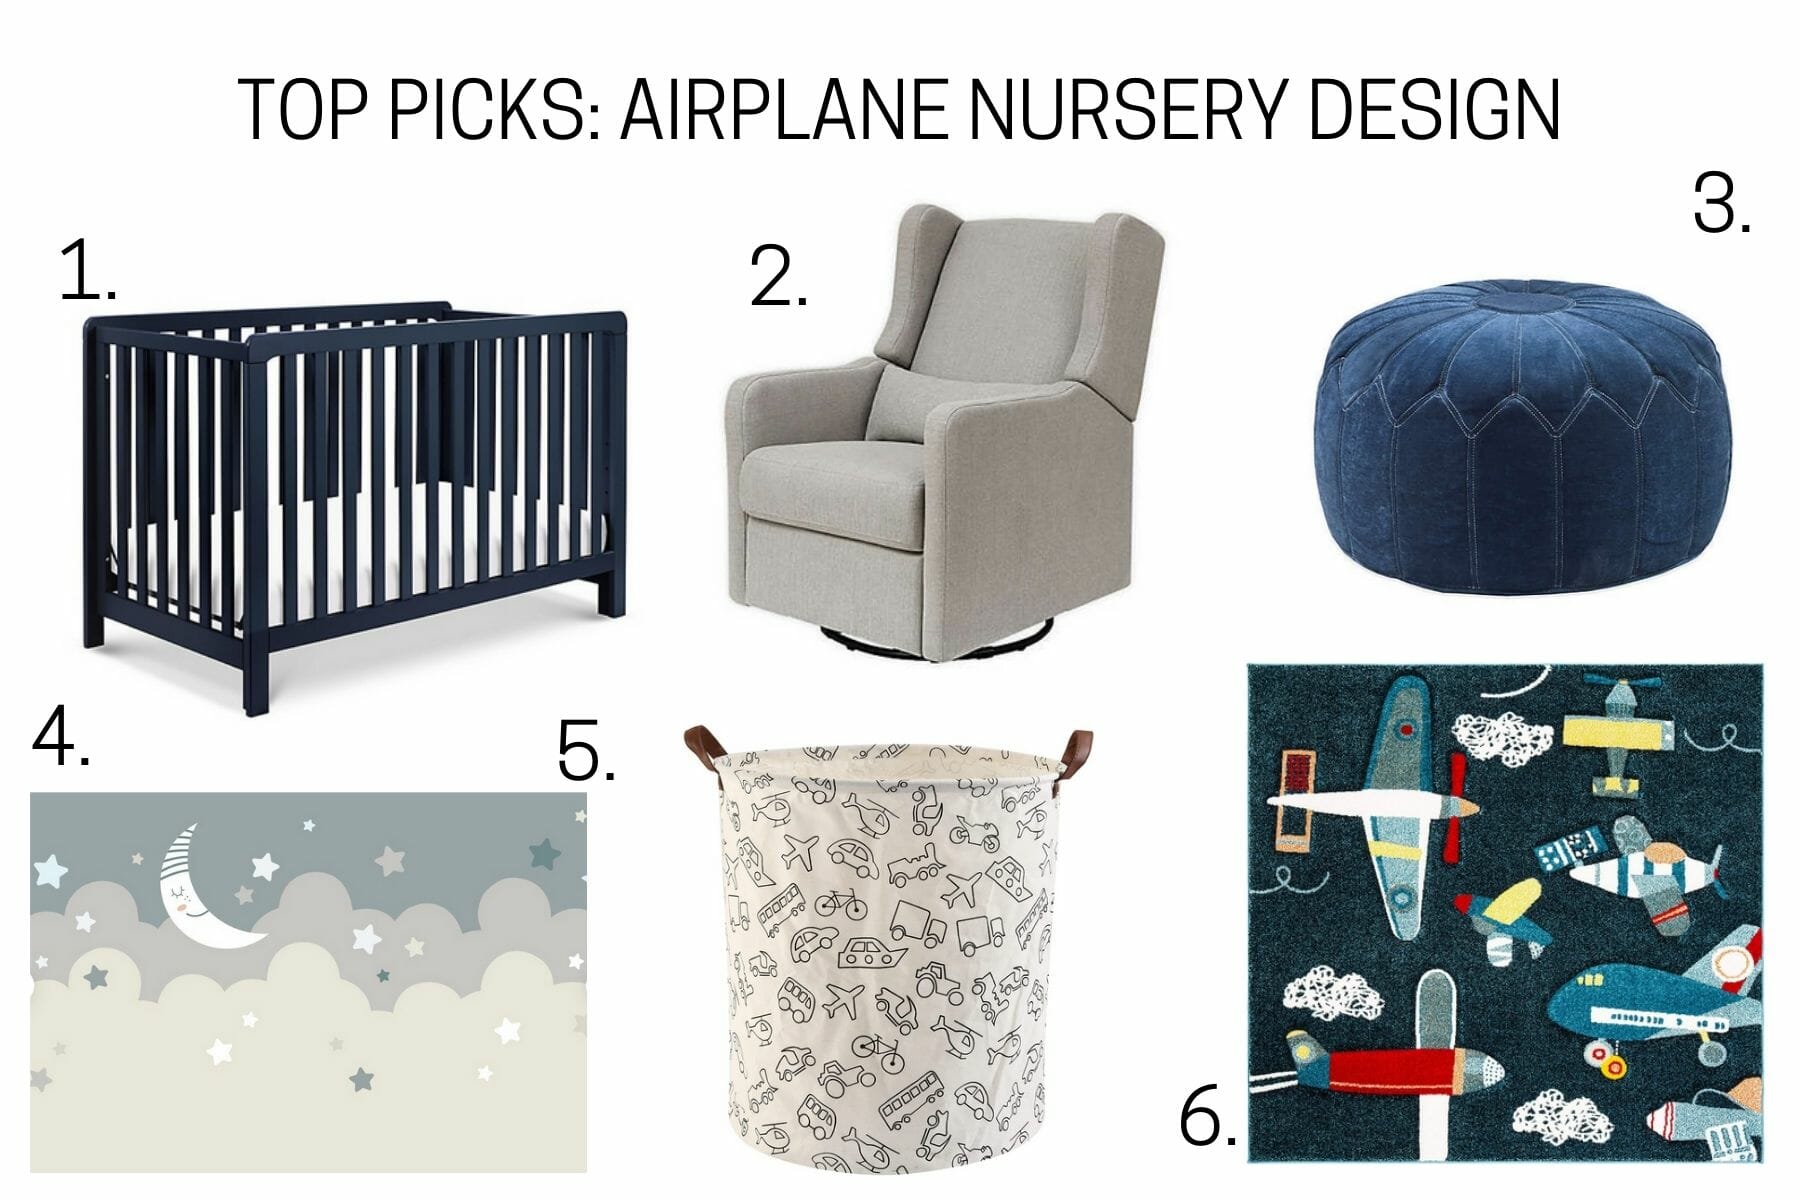 Airplane nursery design top picks